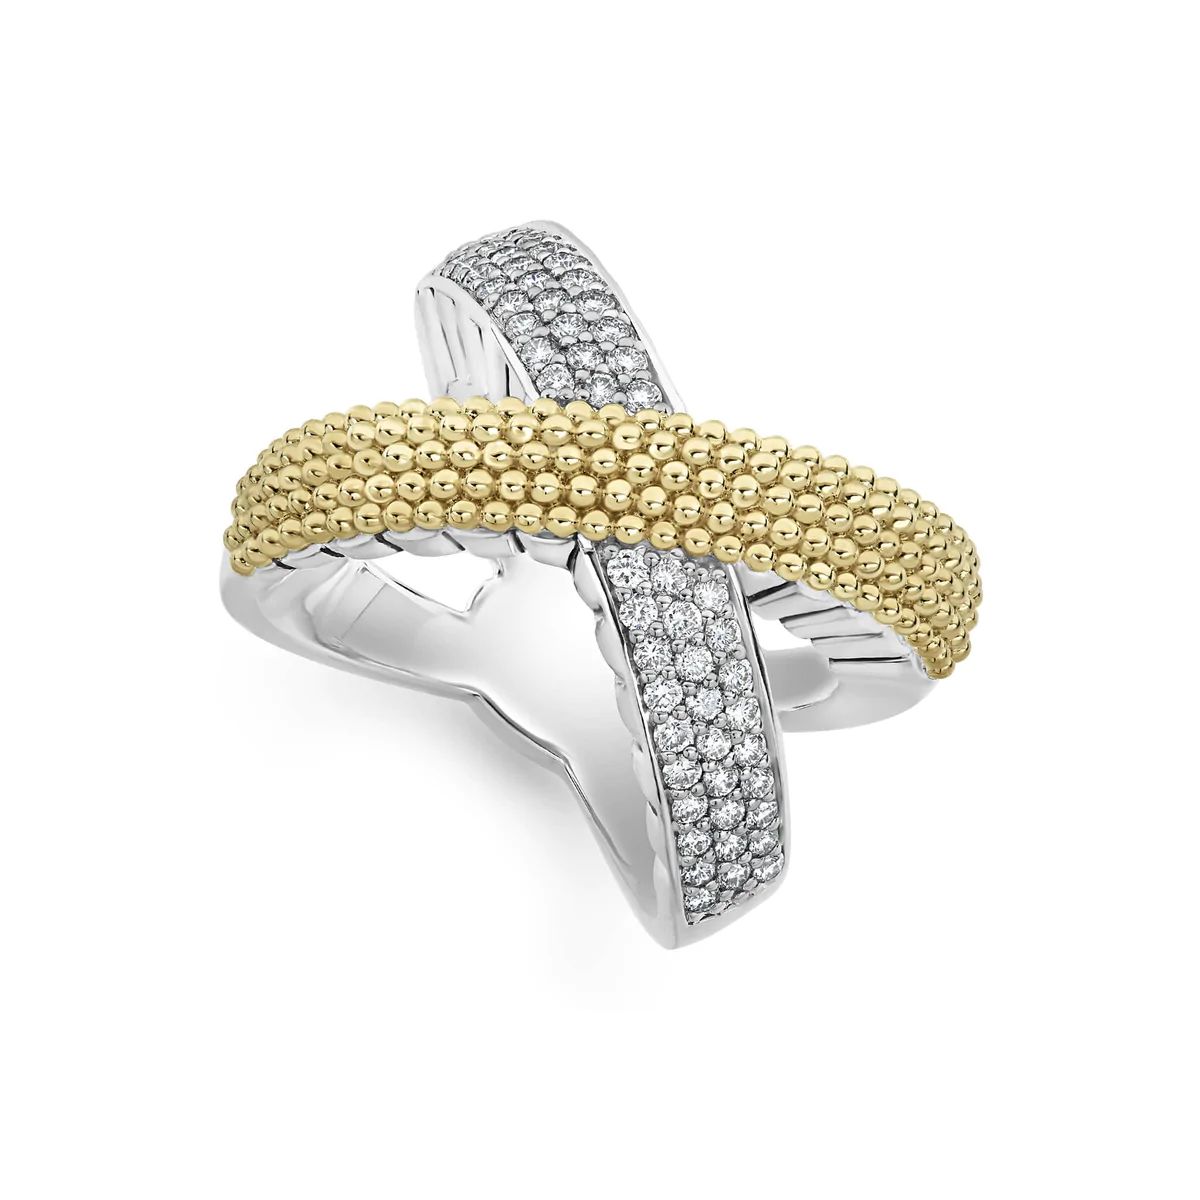 Caviar Lux X Gold Caviar Diamond Ring | LAGOS